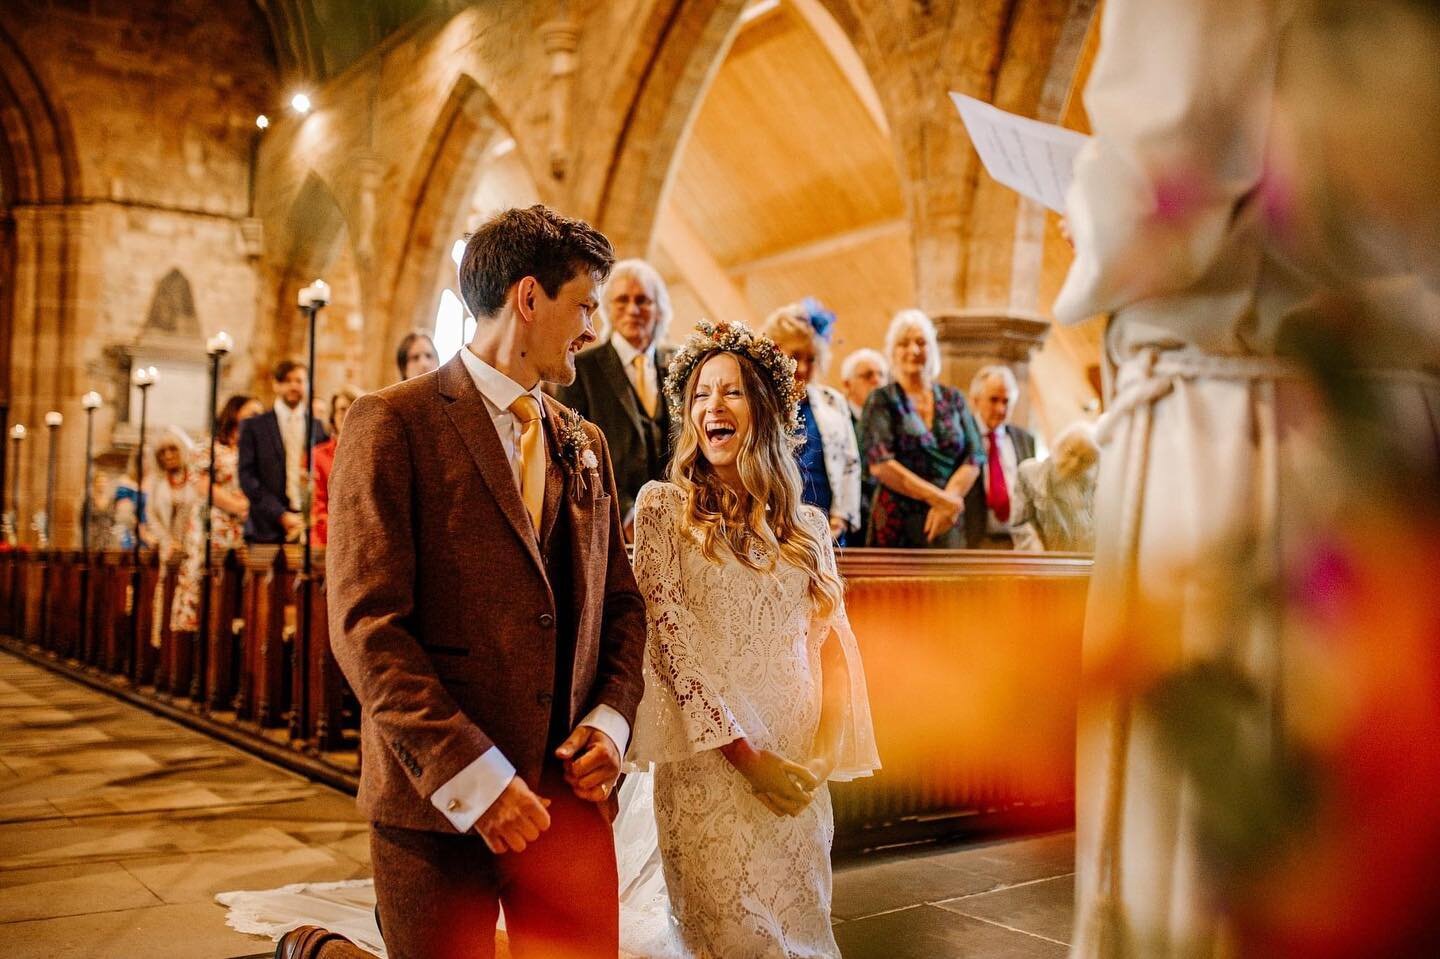 Congratulations Mr &amp; Mrs Archer 🎉
.
.
.
.
.

#weddings #love #candid #nikon #passion #engaged #weddinginspiration #weddingphotography #wildwedding #bridetobe #theoutdoorbride #instawedding #instagram #inspire #beautiful #bewdley #worcestershire 